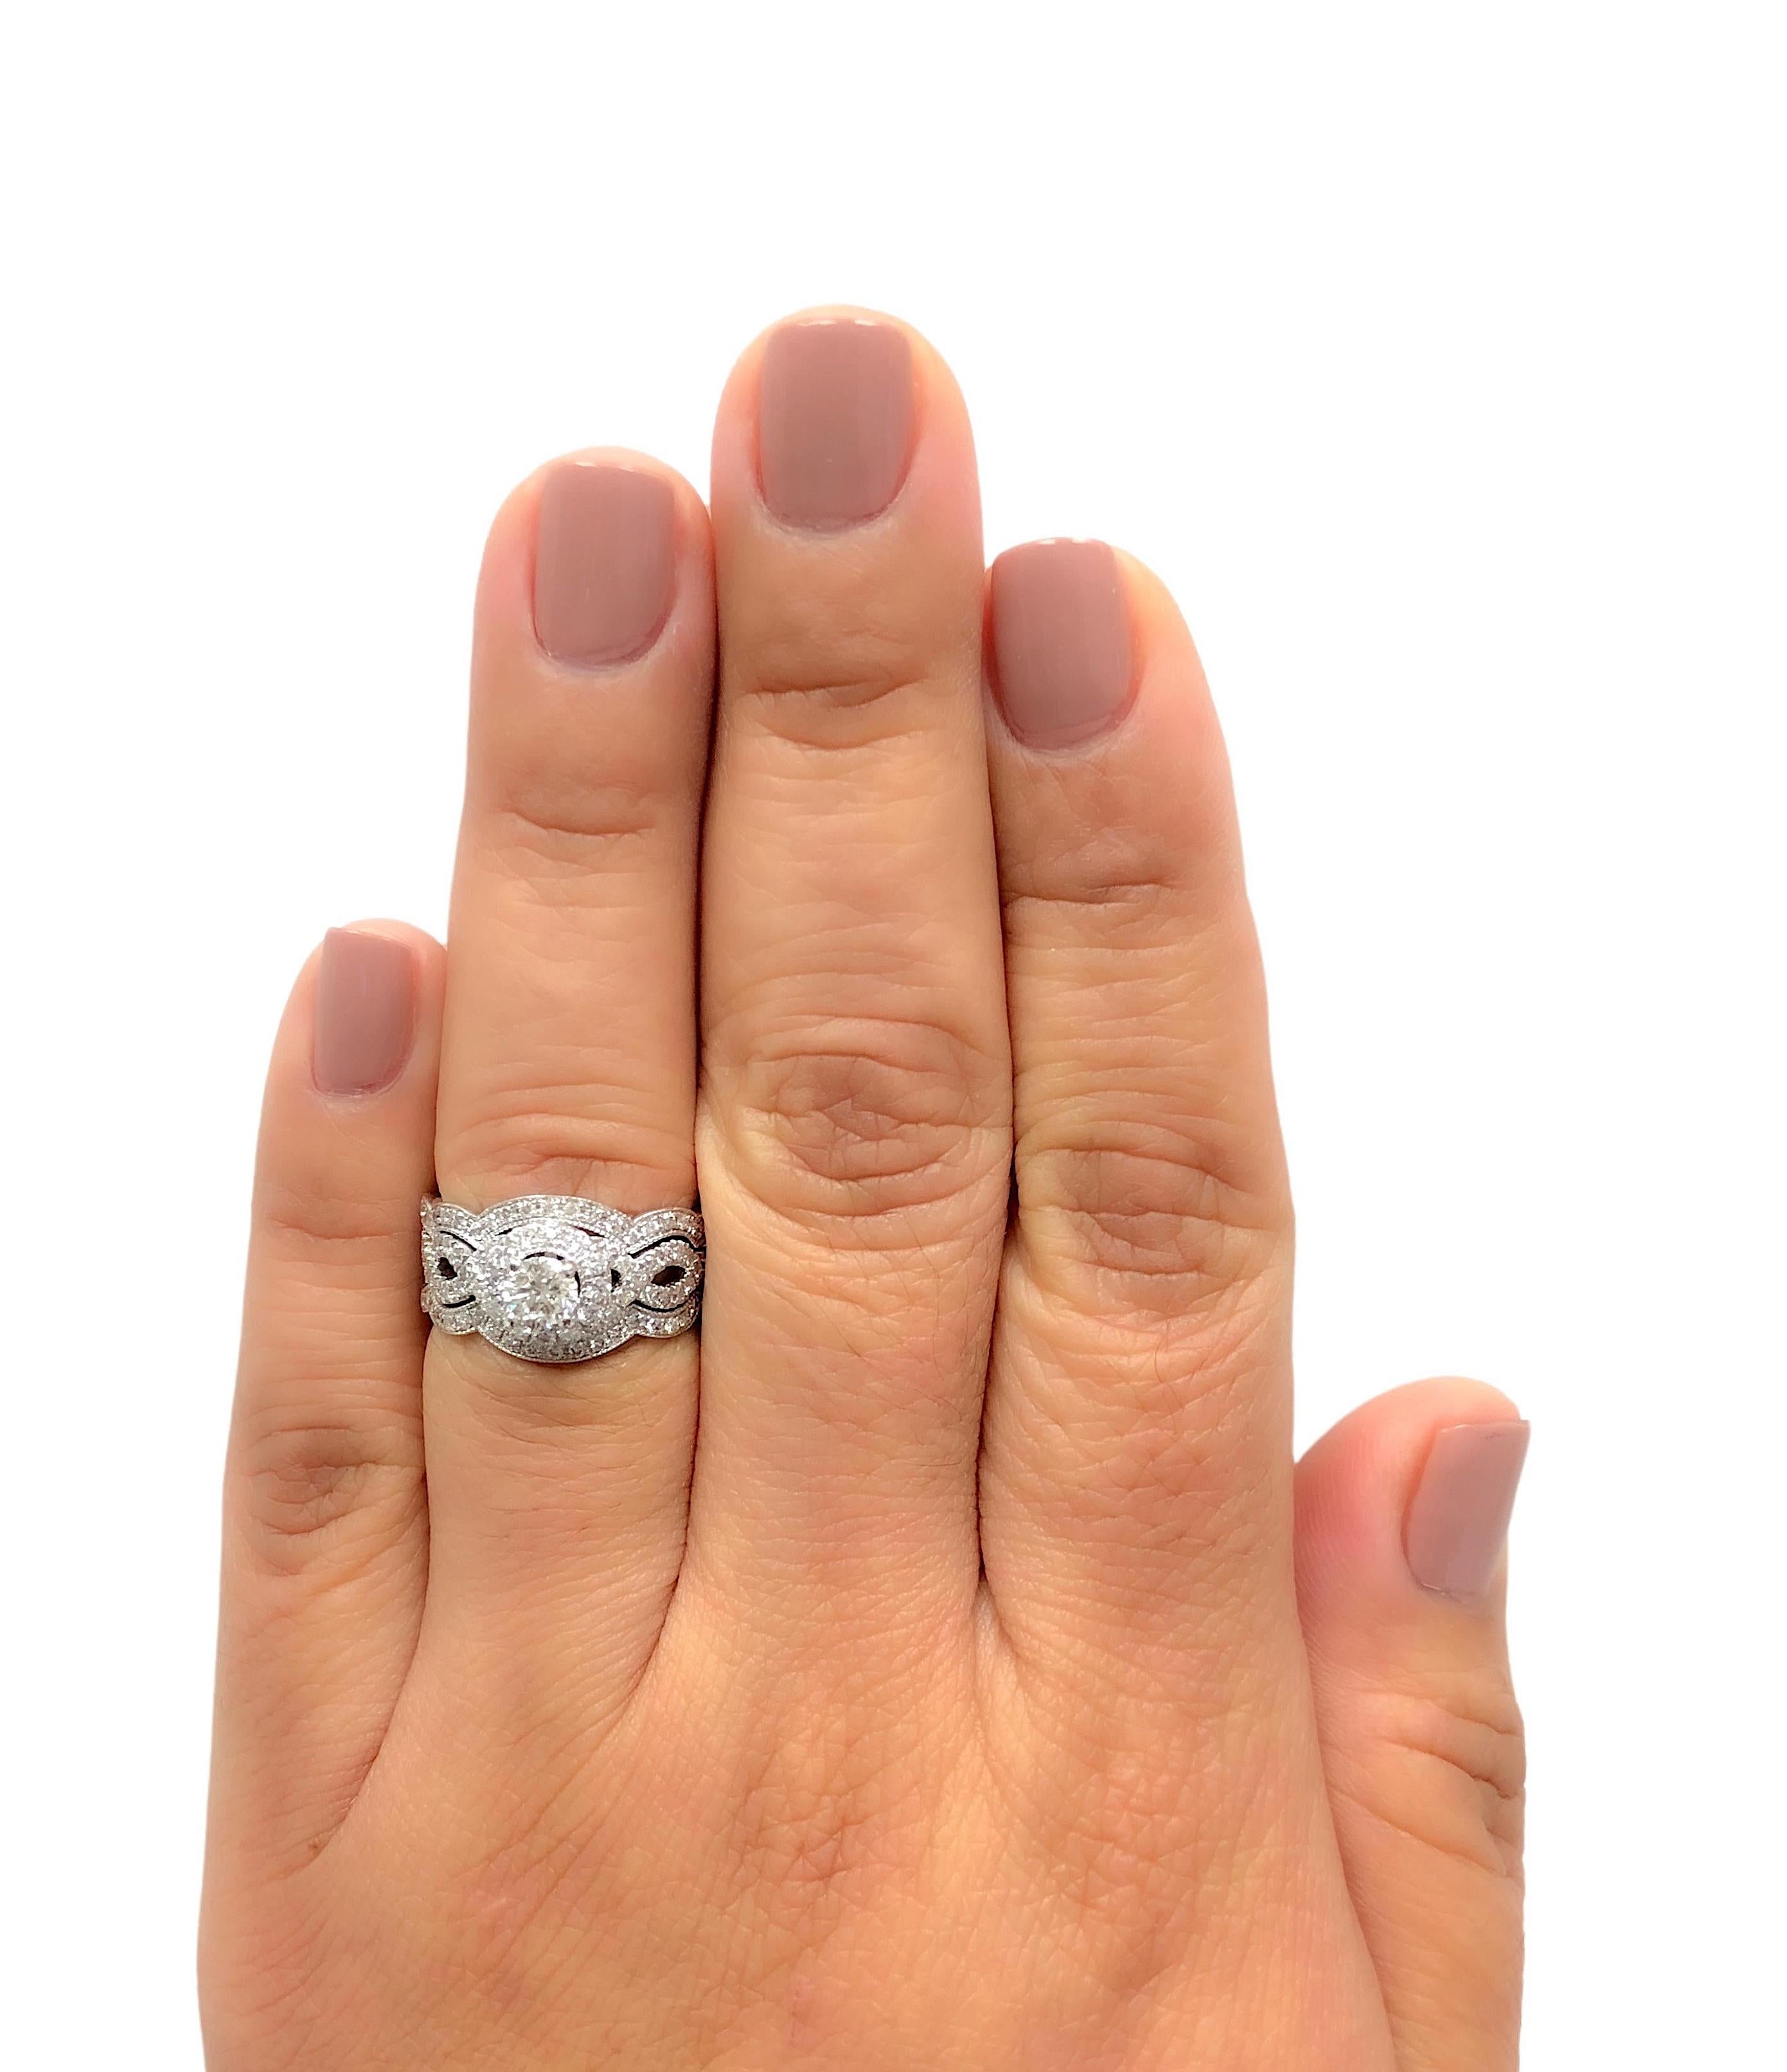 Neil Lane 14K White Gold 1.02ct TW Round Diamond Engagement Ring For Sale 1